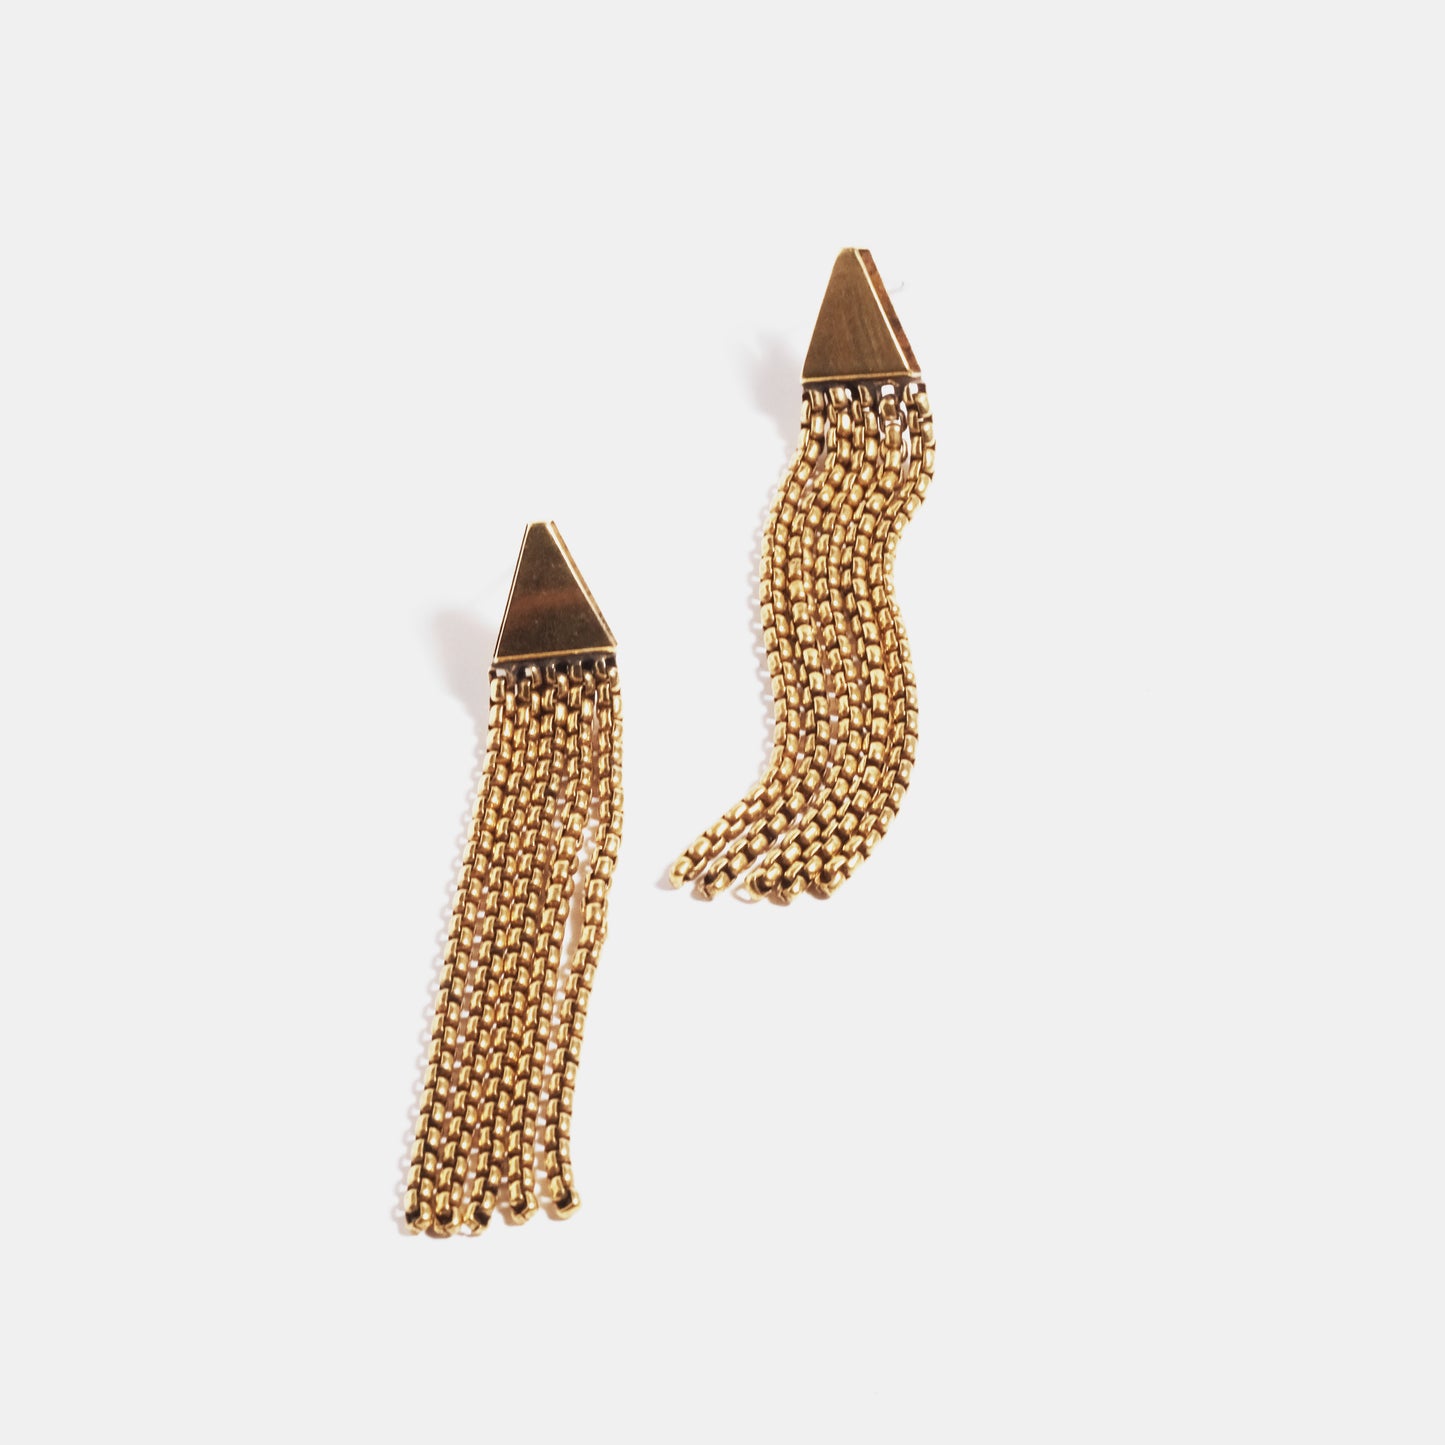 "Tiana" earrings